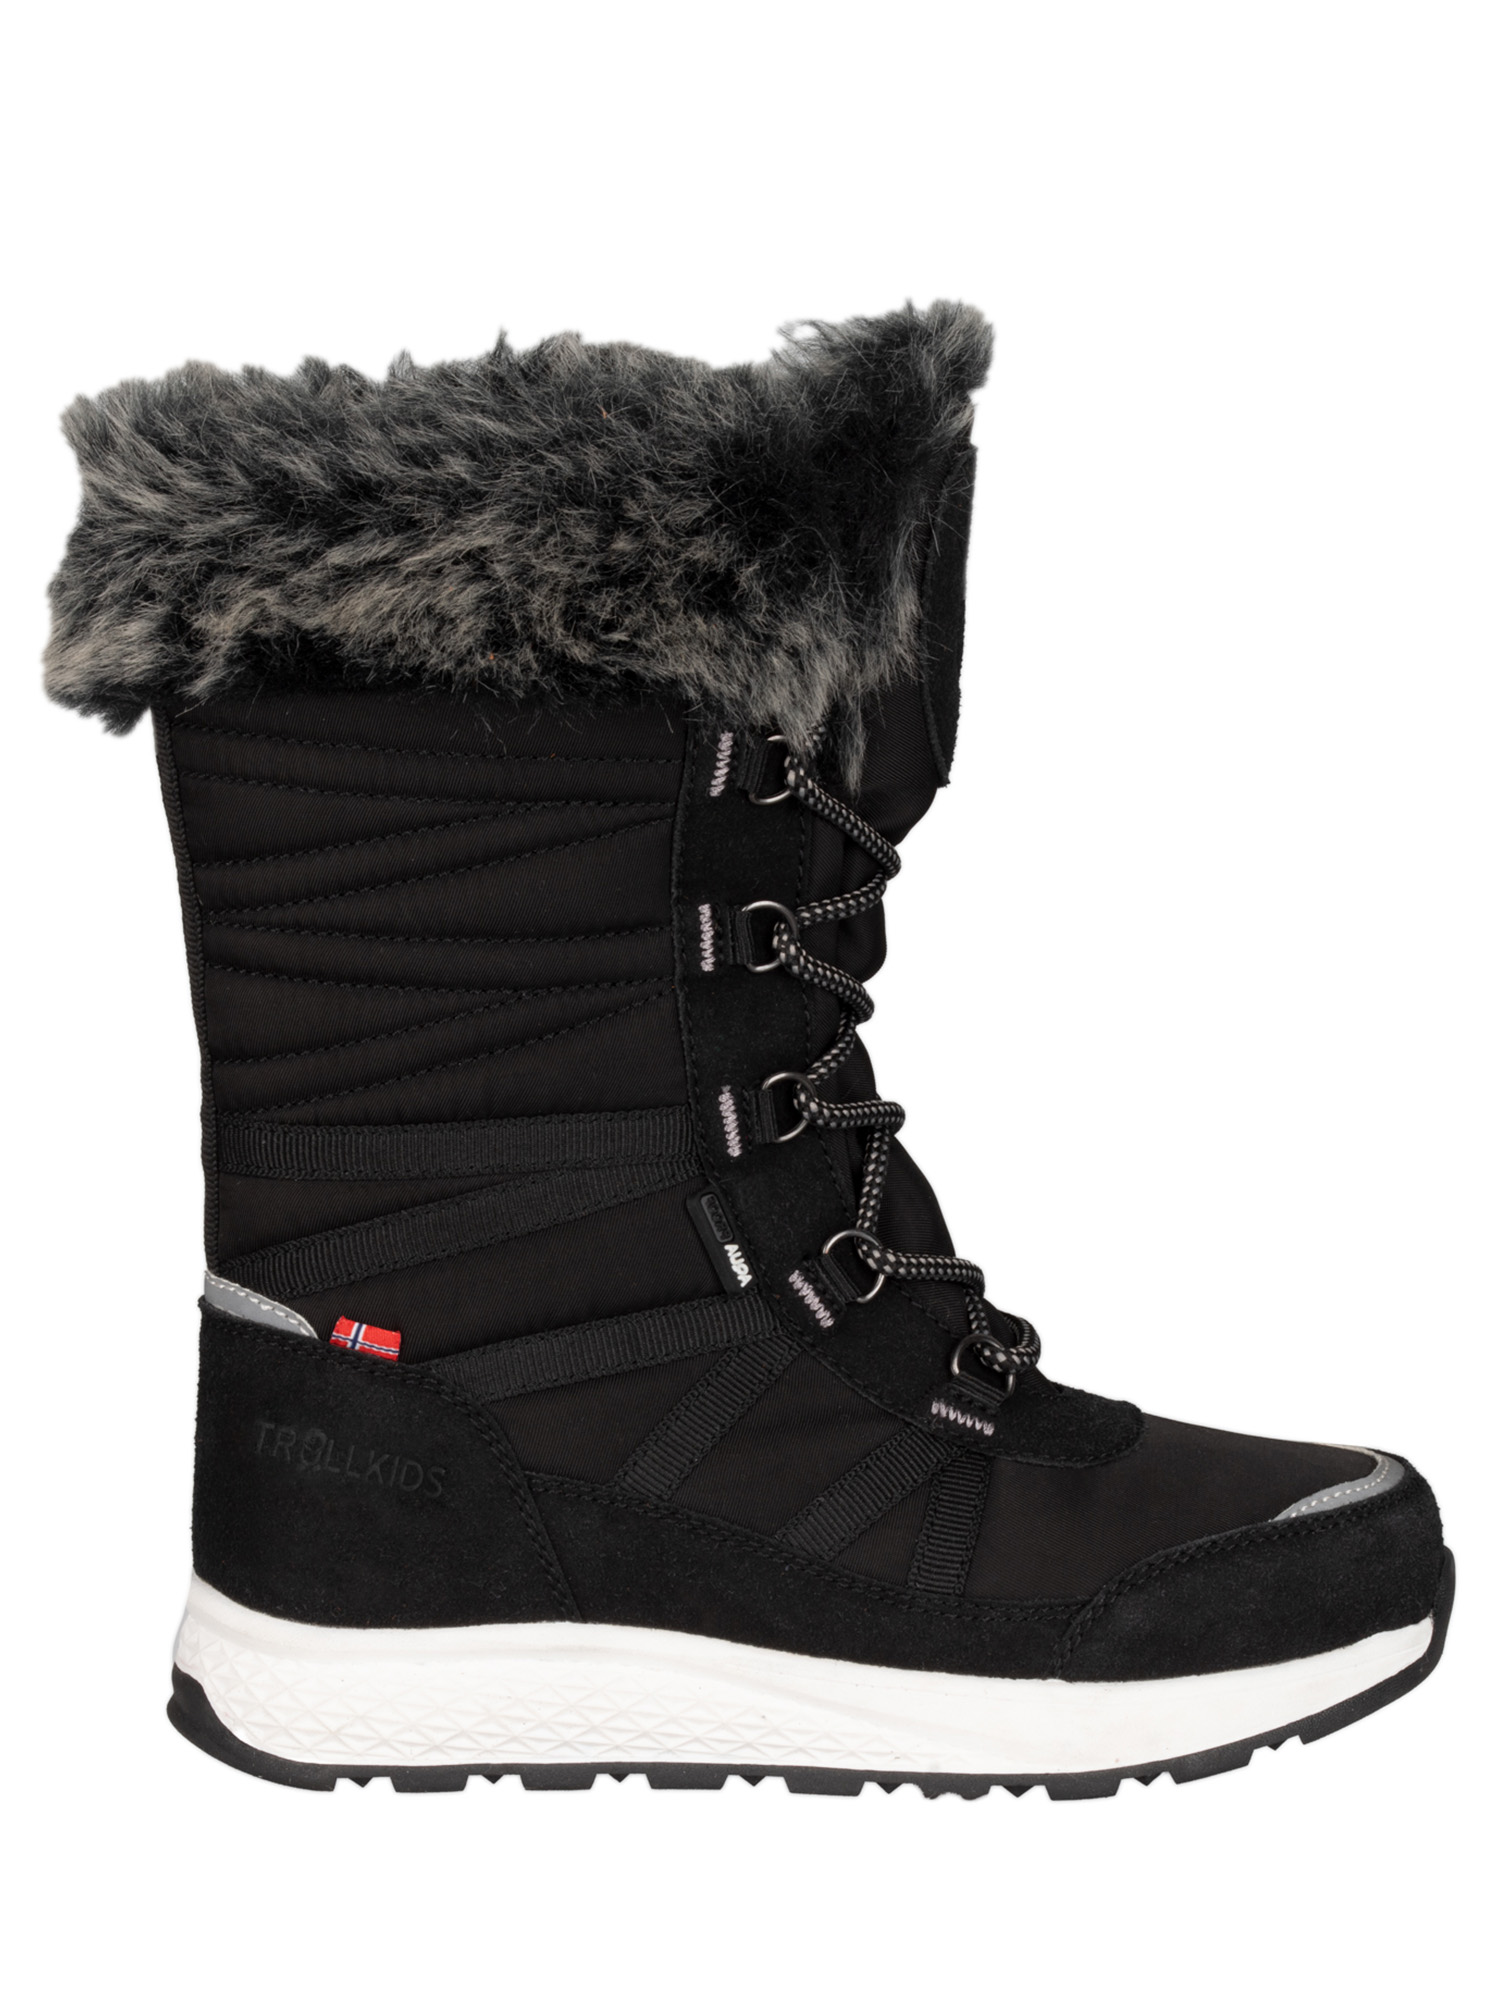 Ботинки Trollkids Girls Hemsedal Winter Boots Xt, черный, 31